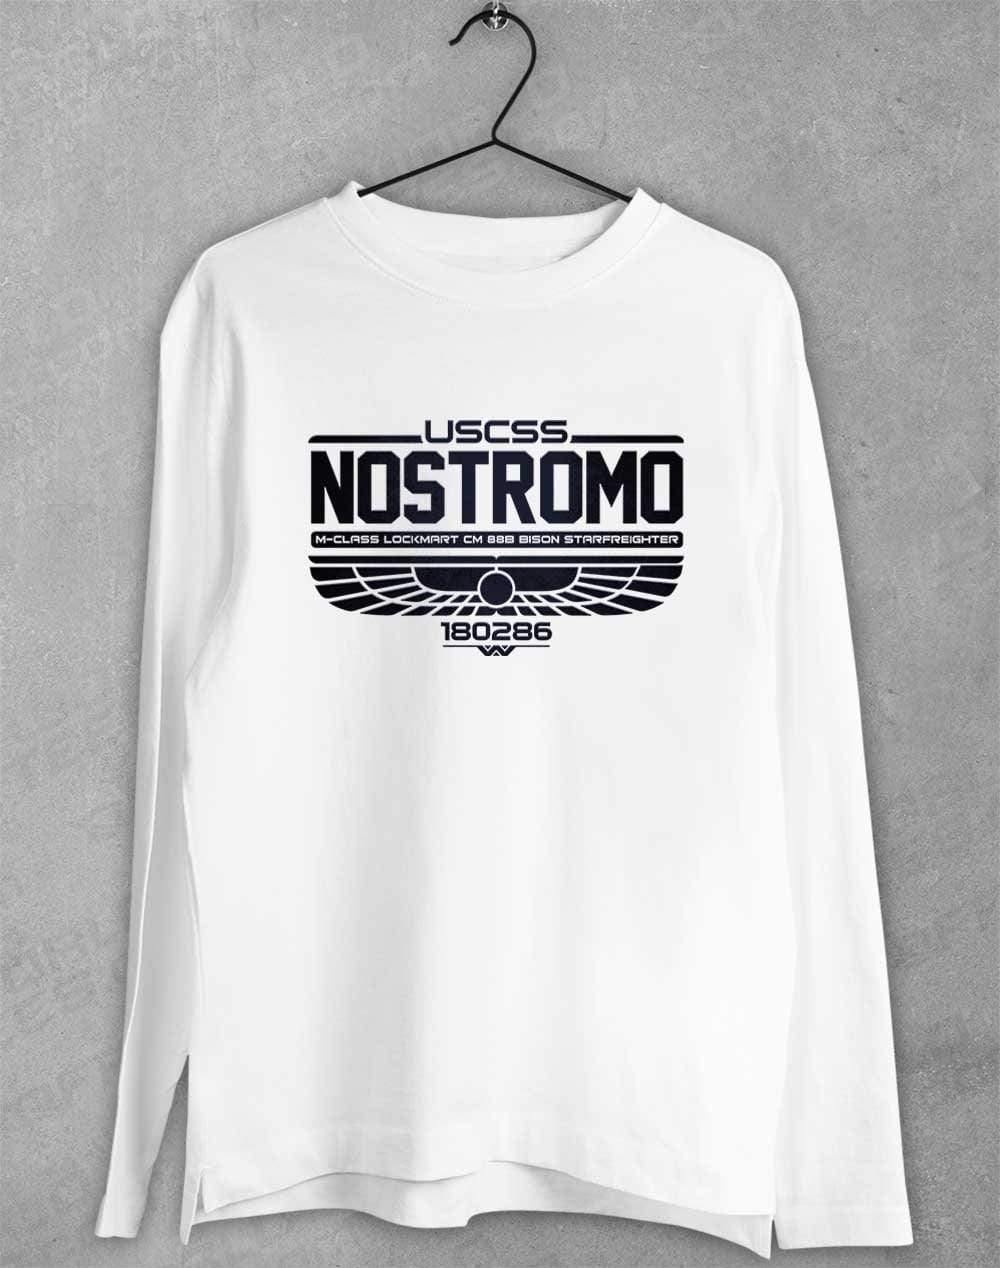 USCSS Nostromo Long Sleeve T-Shirt S / White  - Off World Tees